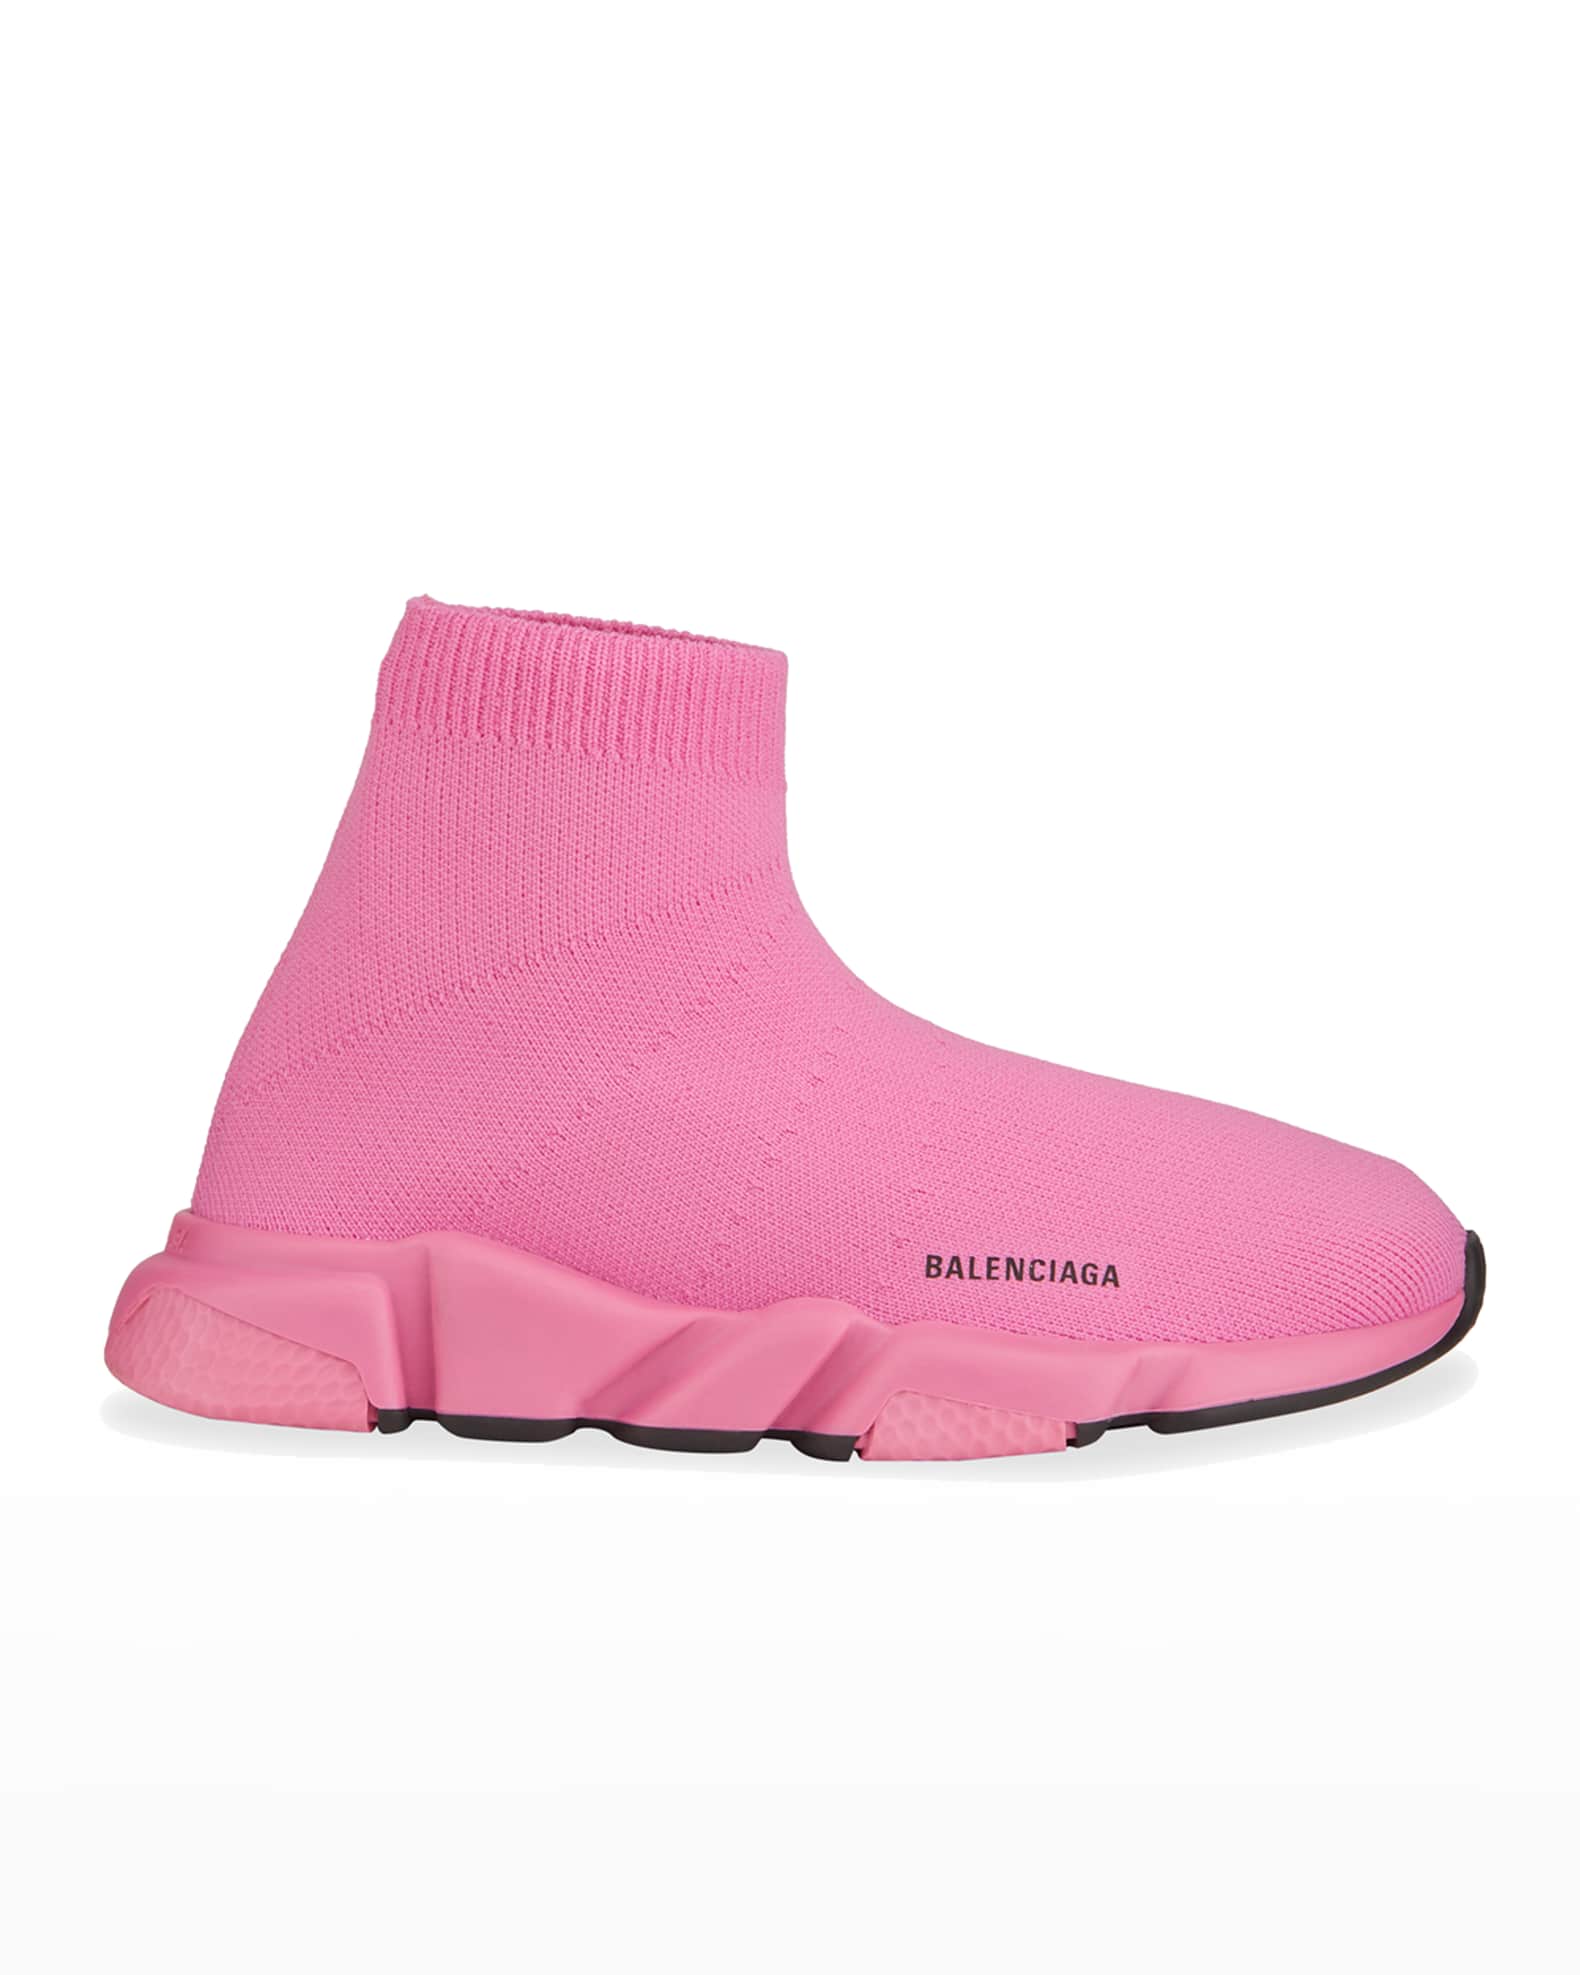 Balenciaga Kid's Knit Sock Trainer Sneakers, Pink | Neiman Marcus